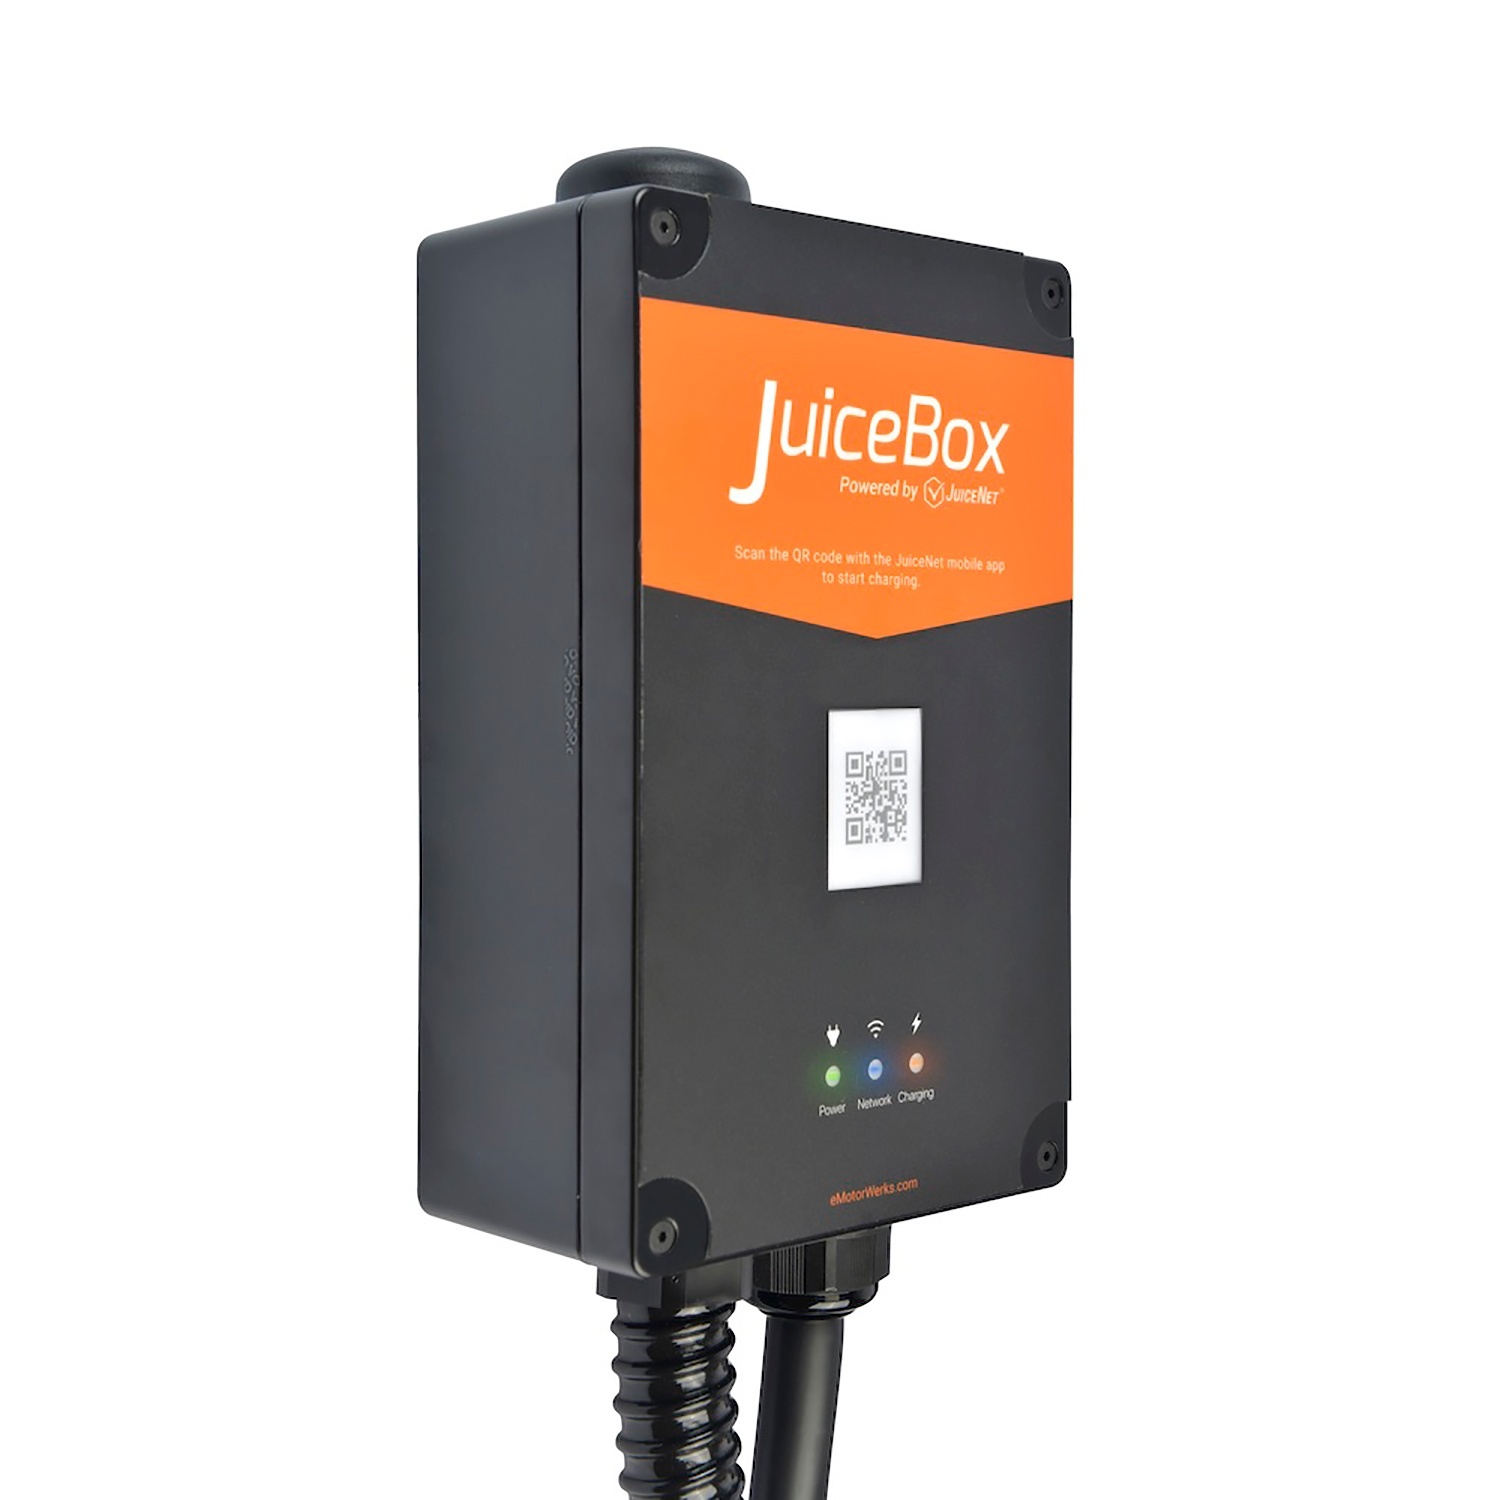 lightroom juicebox pro shareurl button